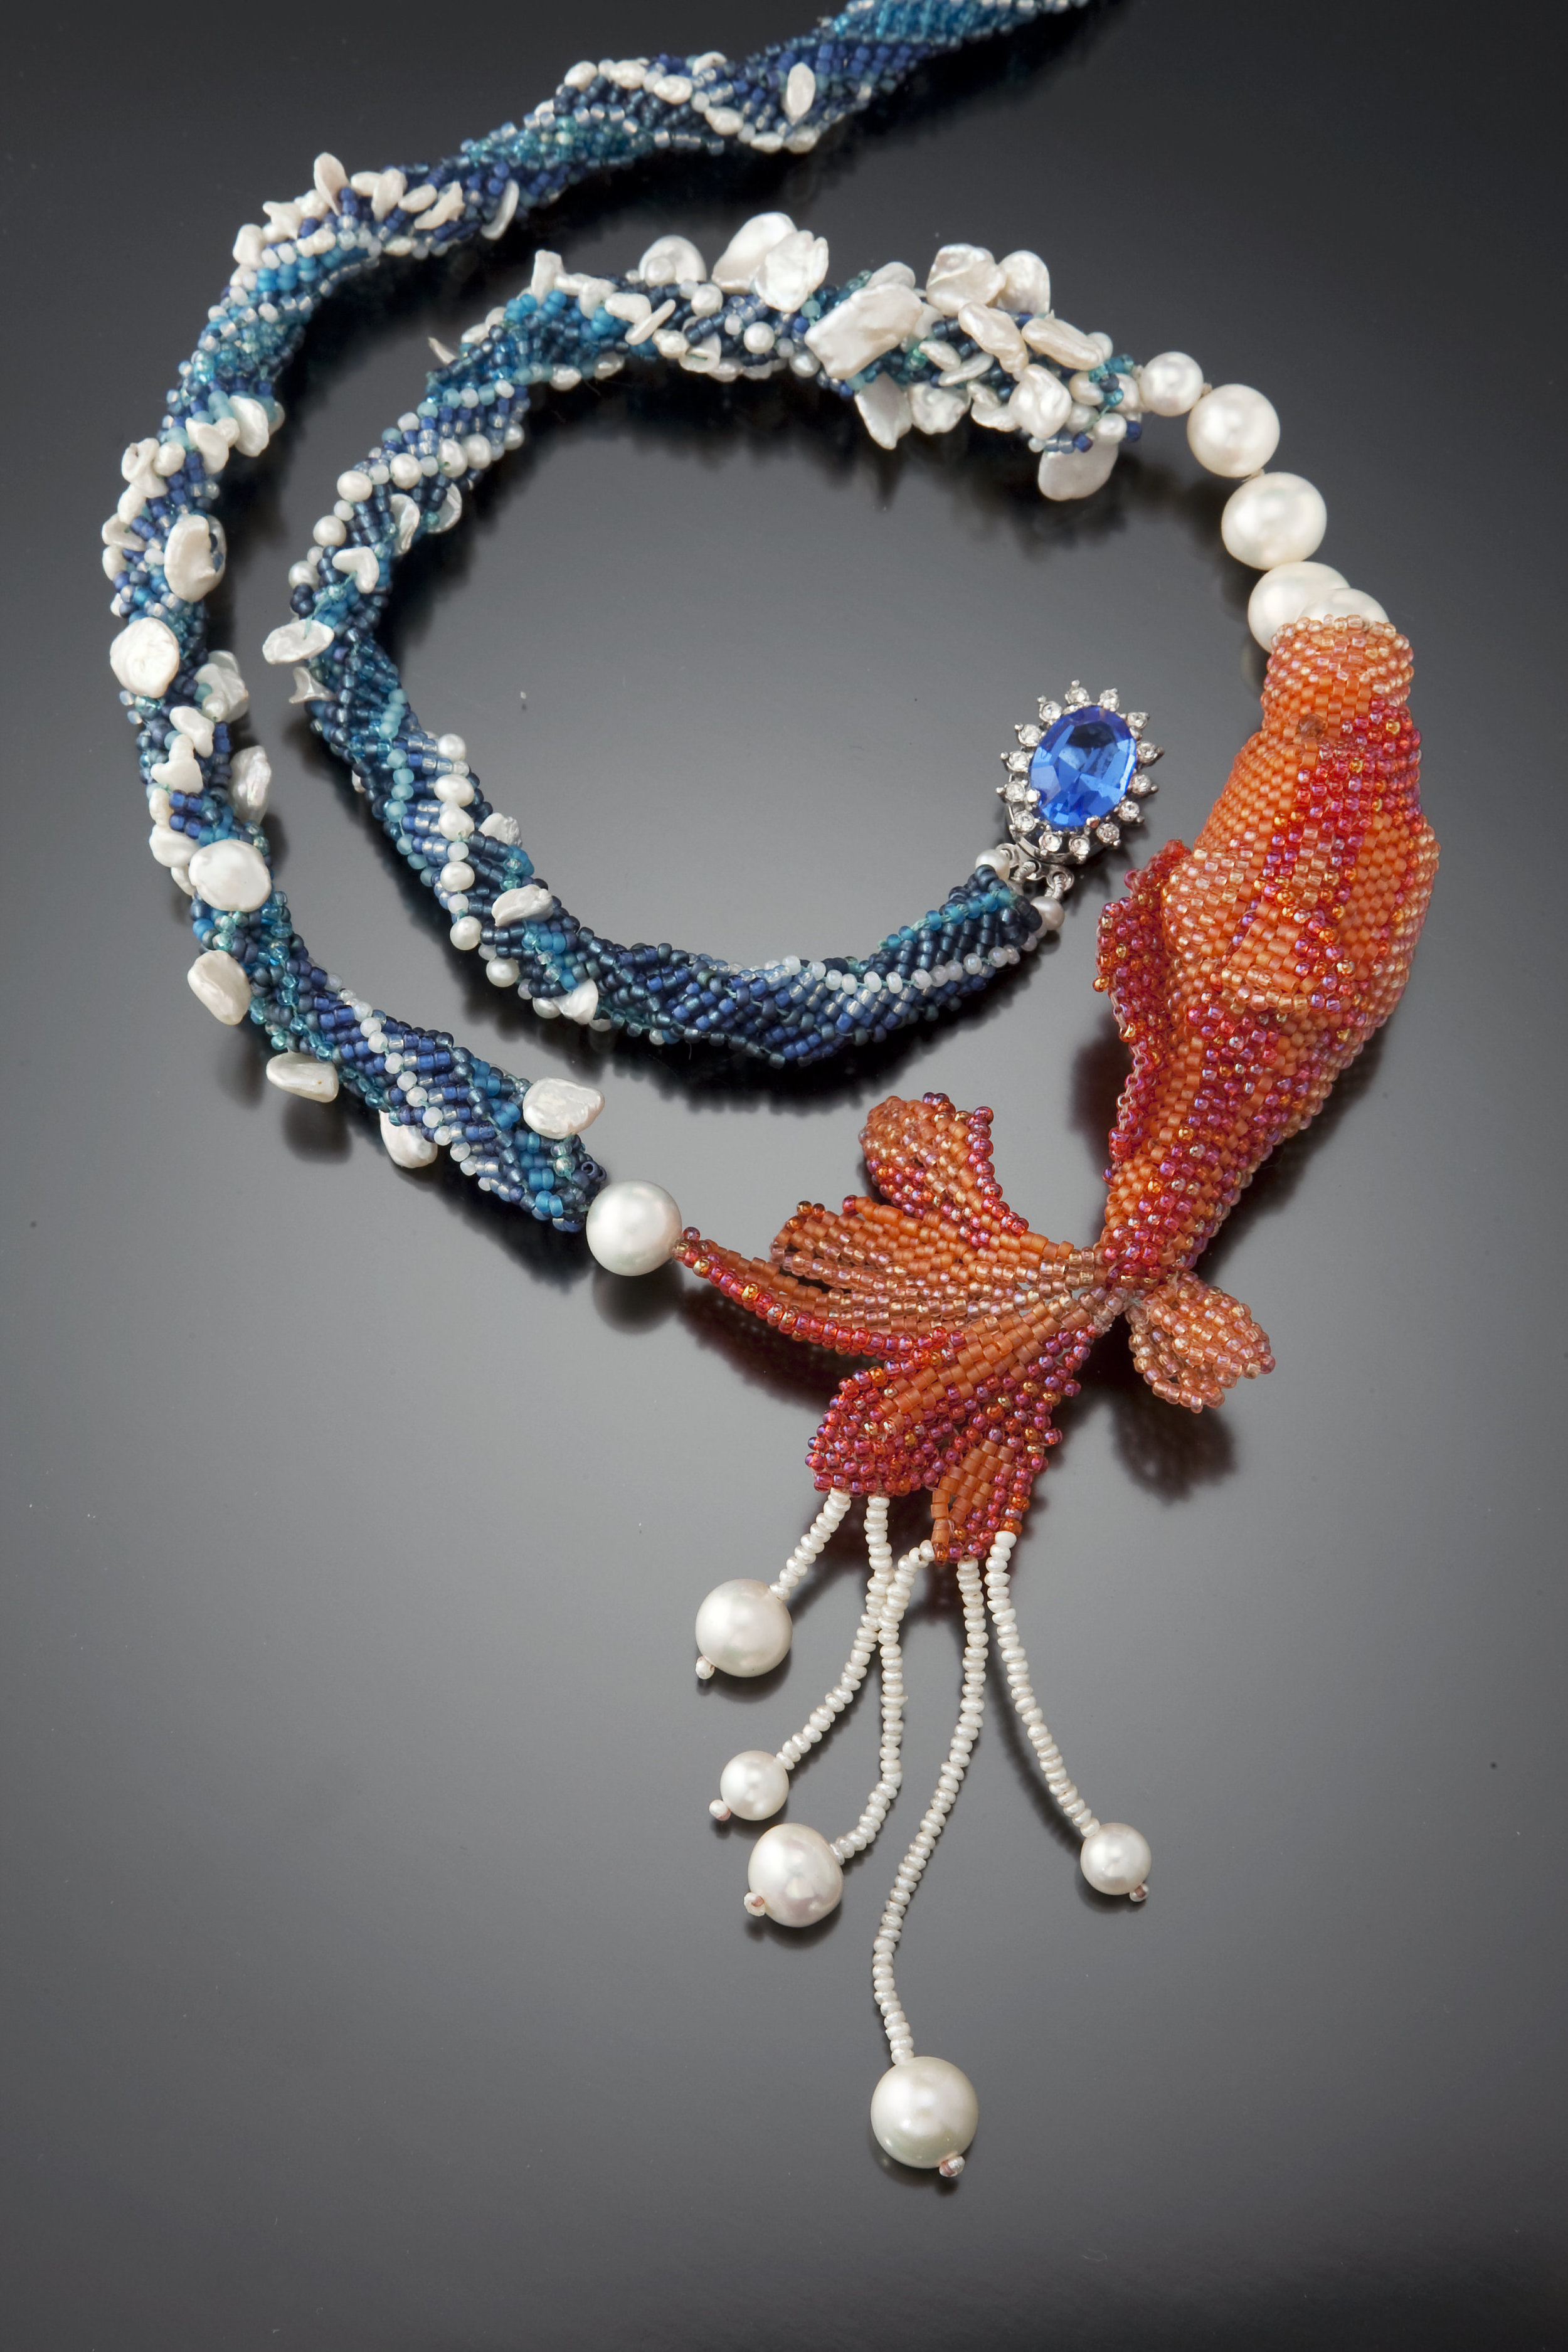 Kanagawa Koi - Sculptural Beadwoven Koi Necklace with Pearls a Plenty